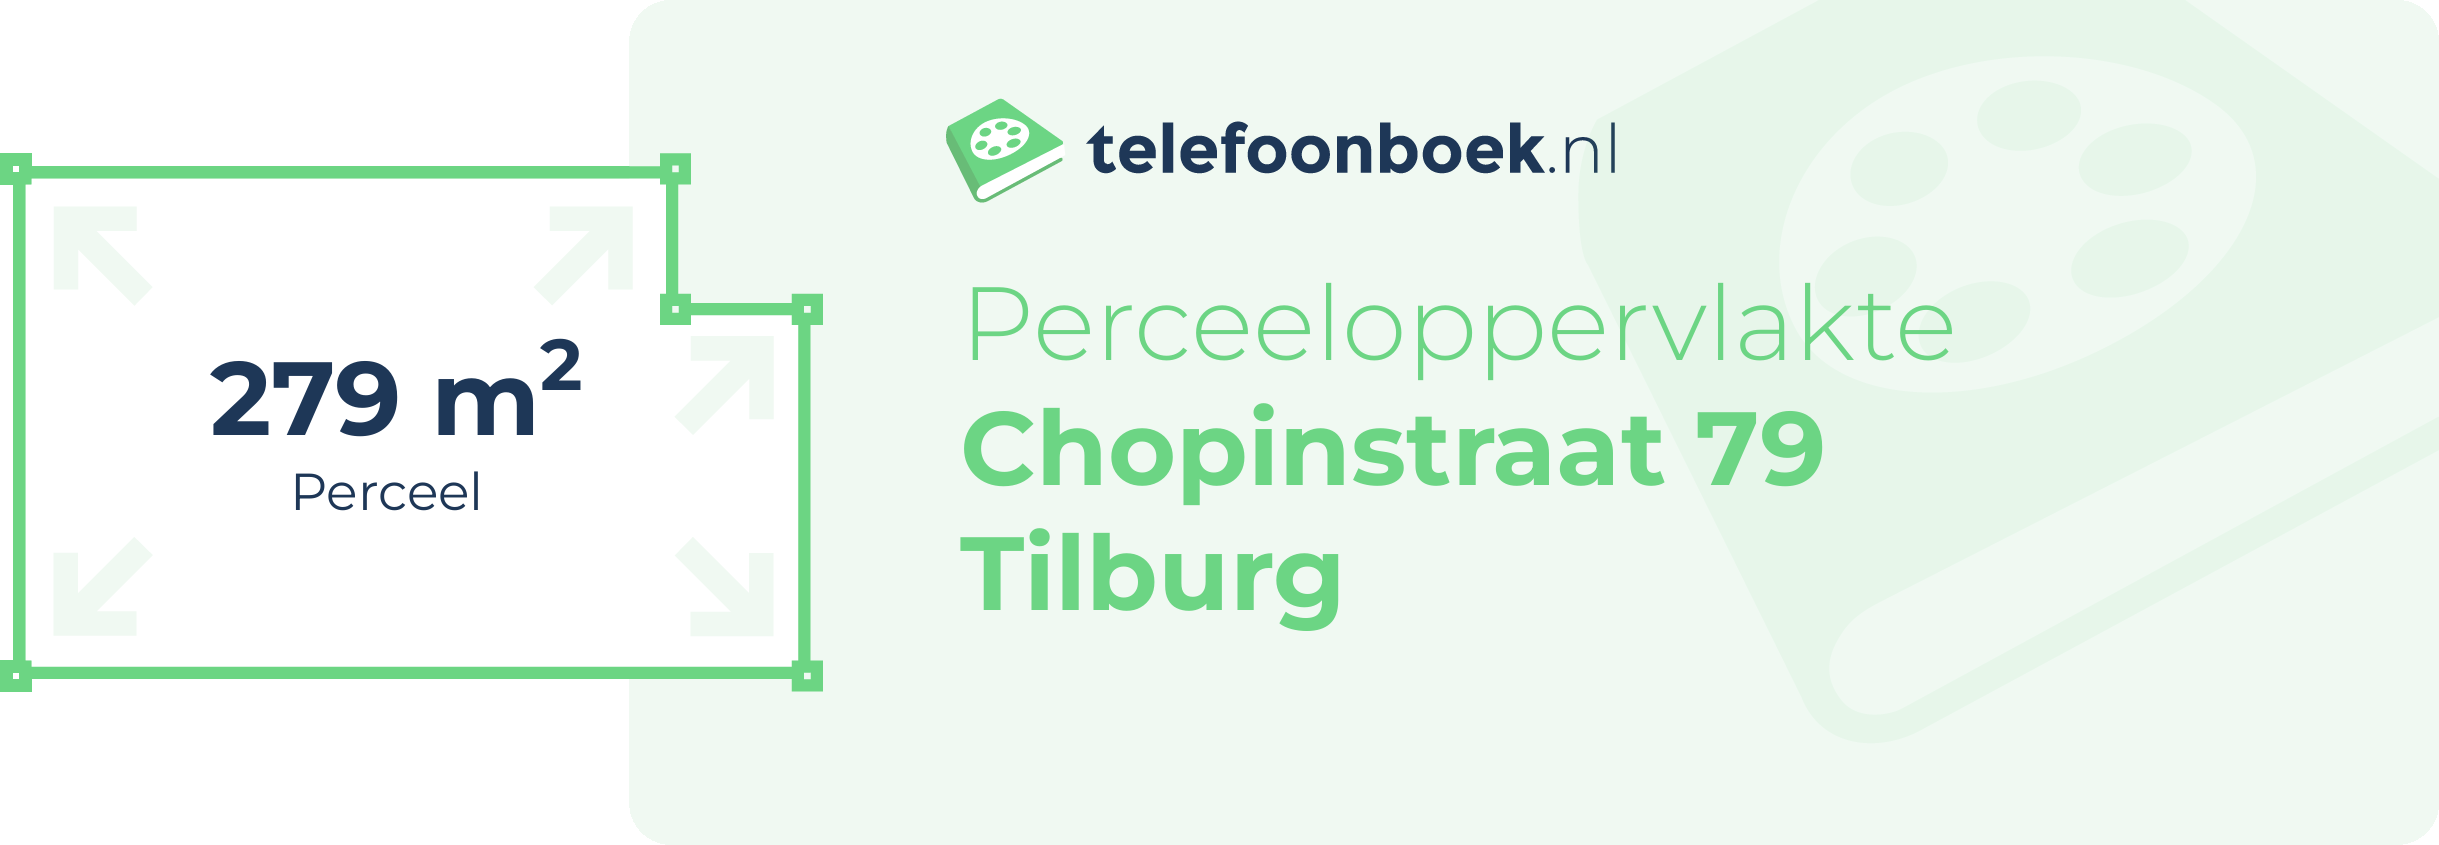 Perceeloppervlakte Chopinstraat 79 Tilburg